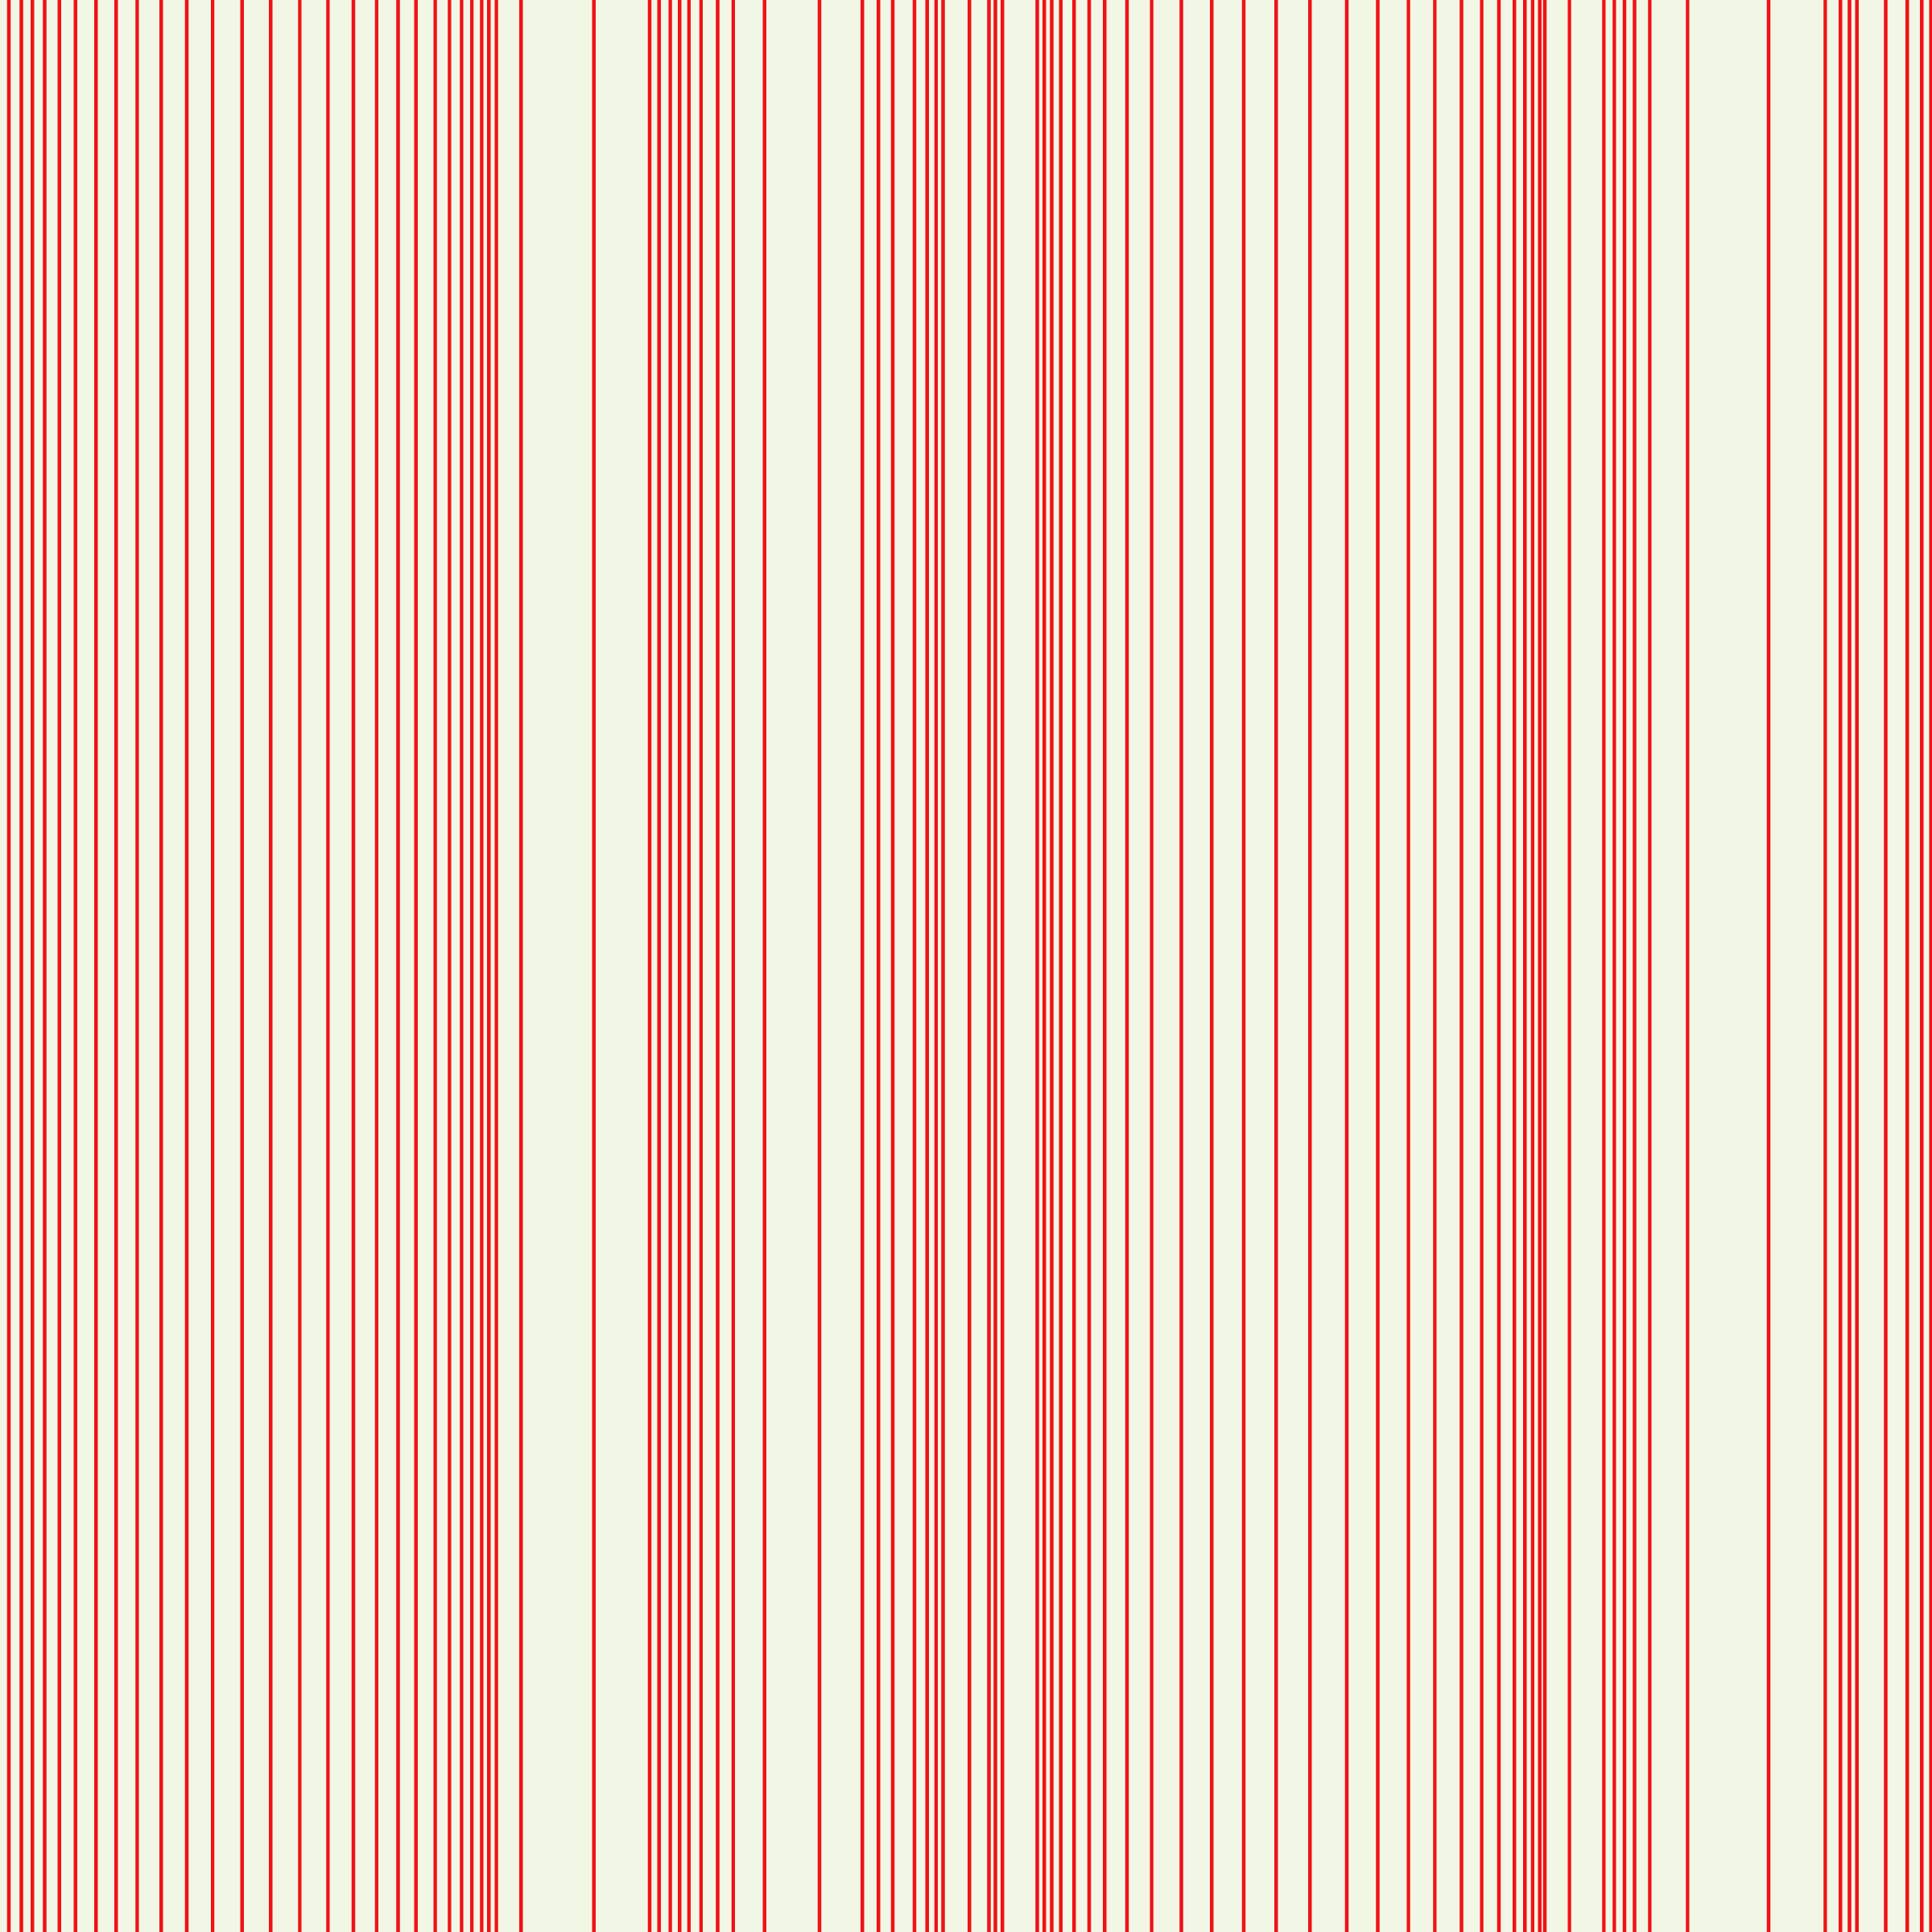 Encoded Stripe - Red (Copy)